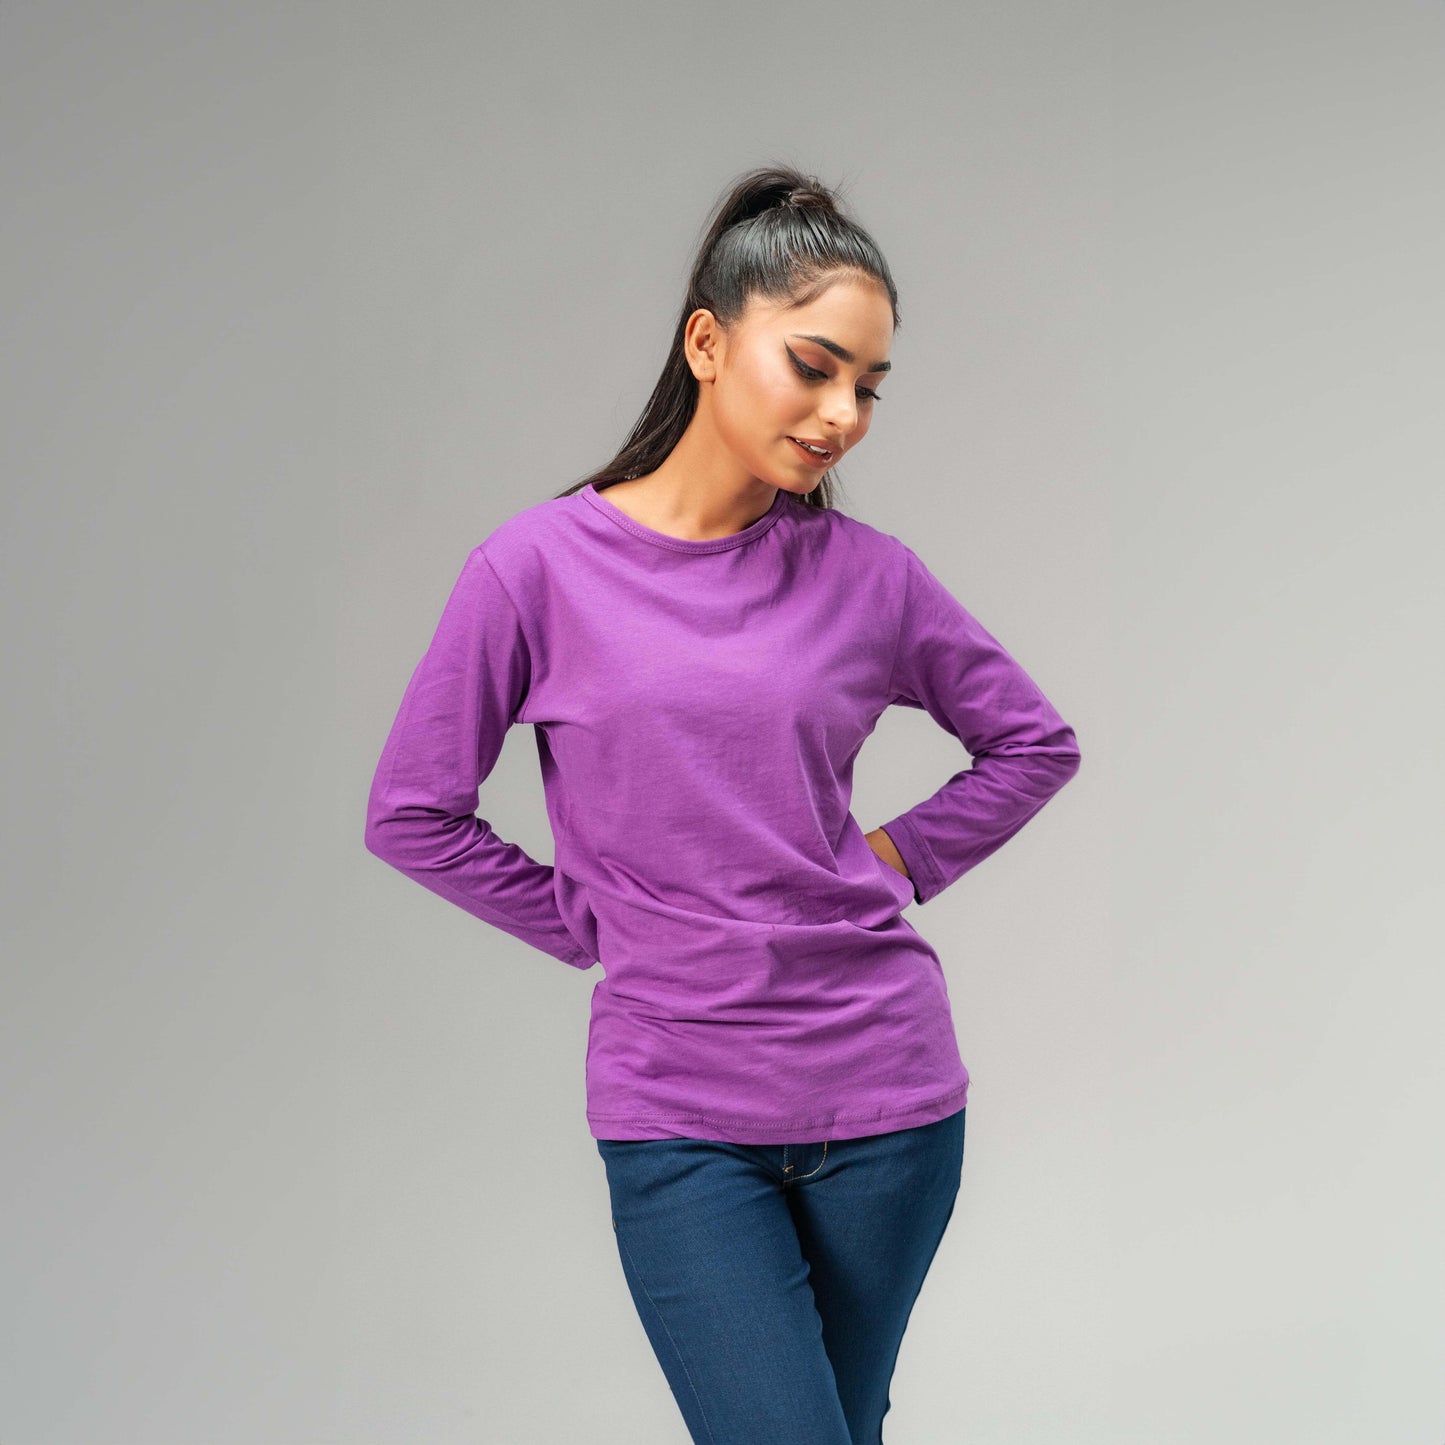 Max 21 Women's Solid Long Sleeve Tee Shirt Women's Tee Shirt SZK Purple S 